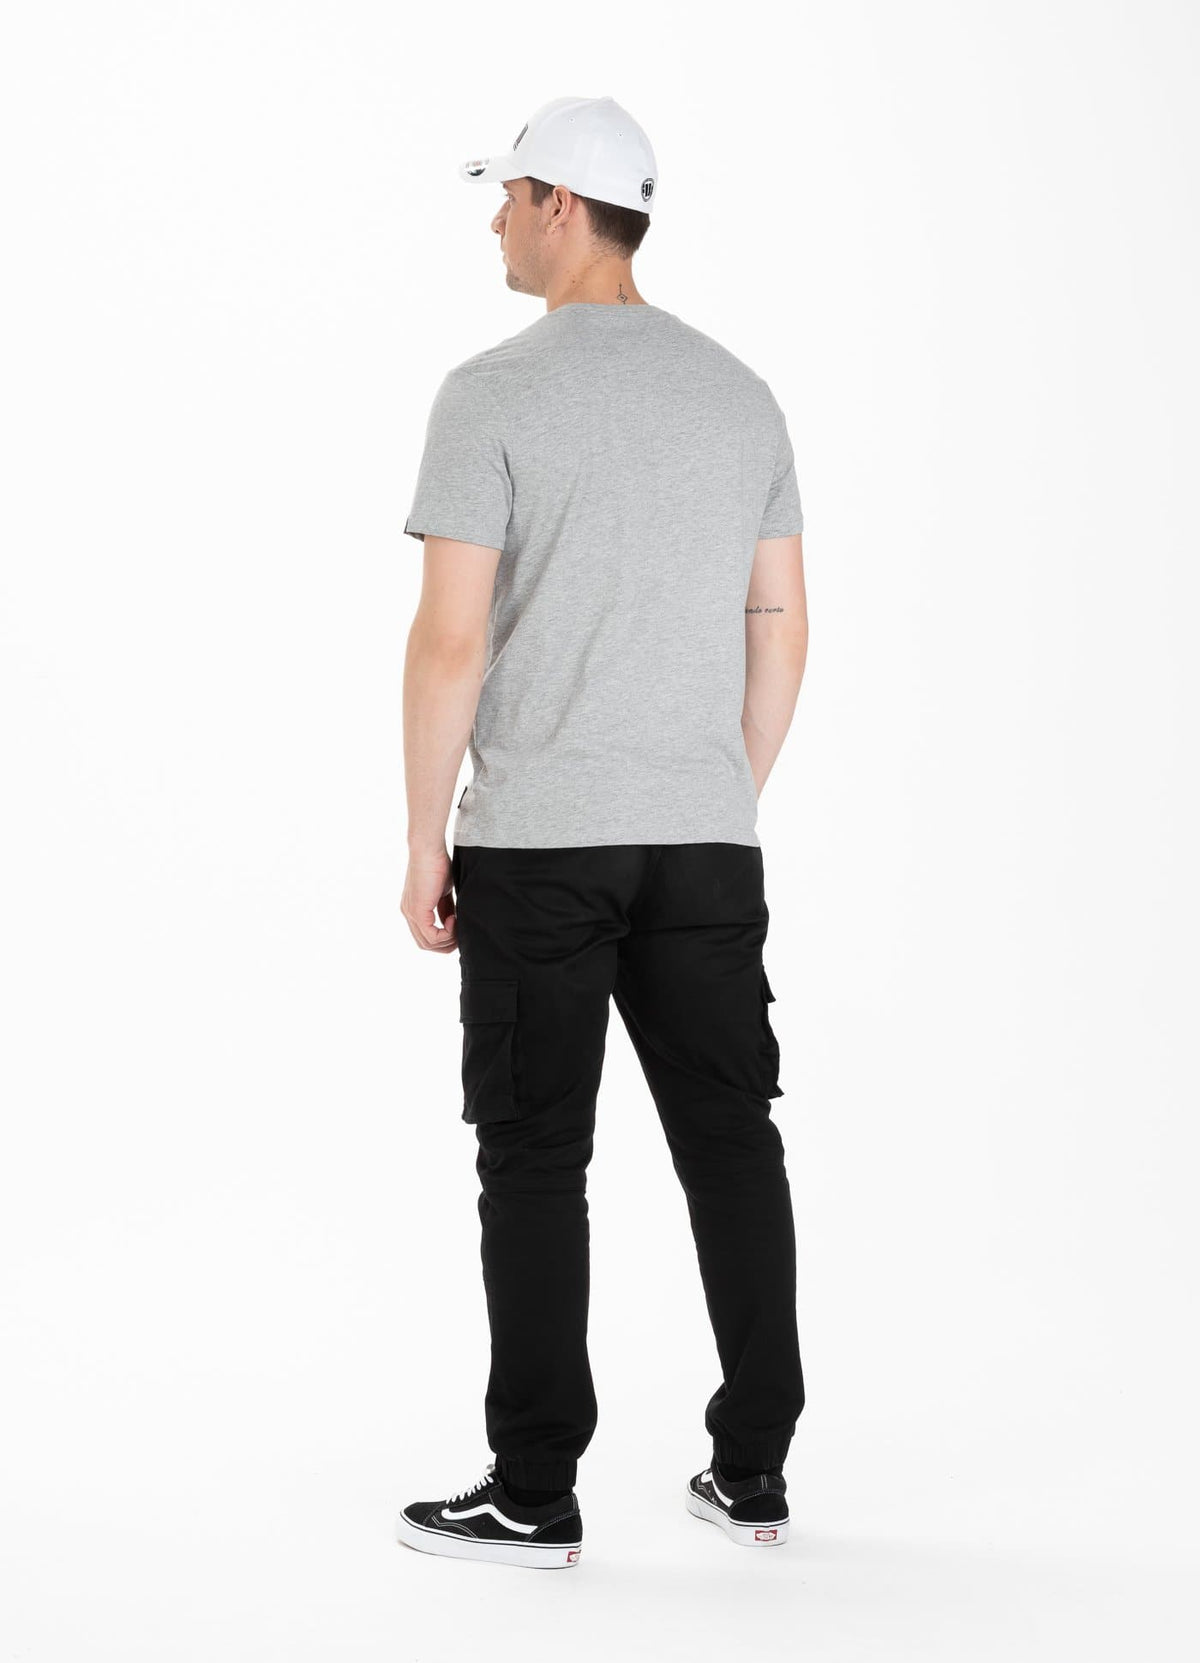 T-Shirt SMALL LOGO 21 Grey MLG - Pitbull West Coast International Store 